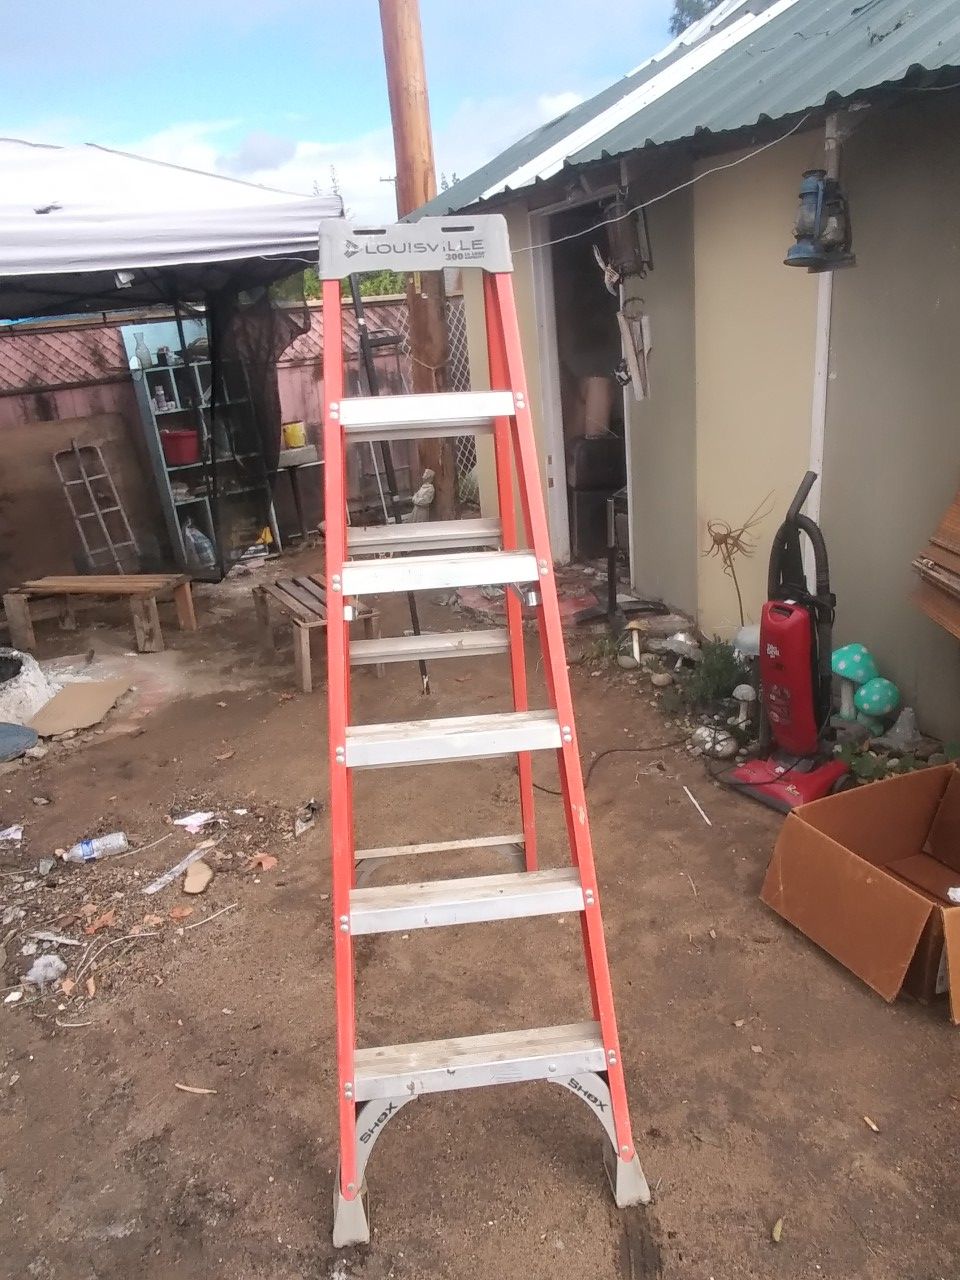 Louisville 6' A frame ladder